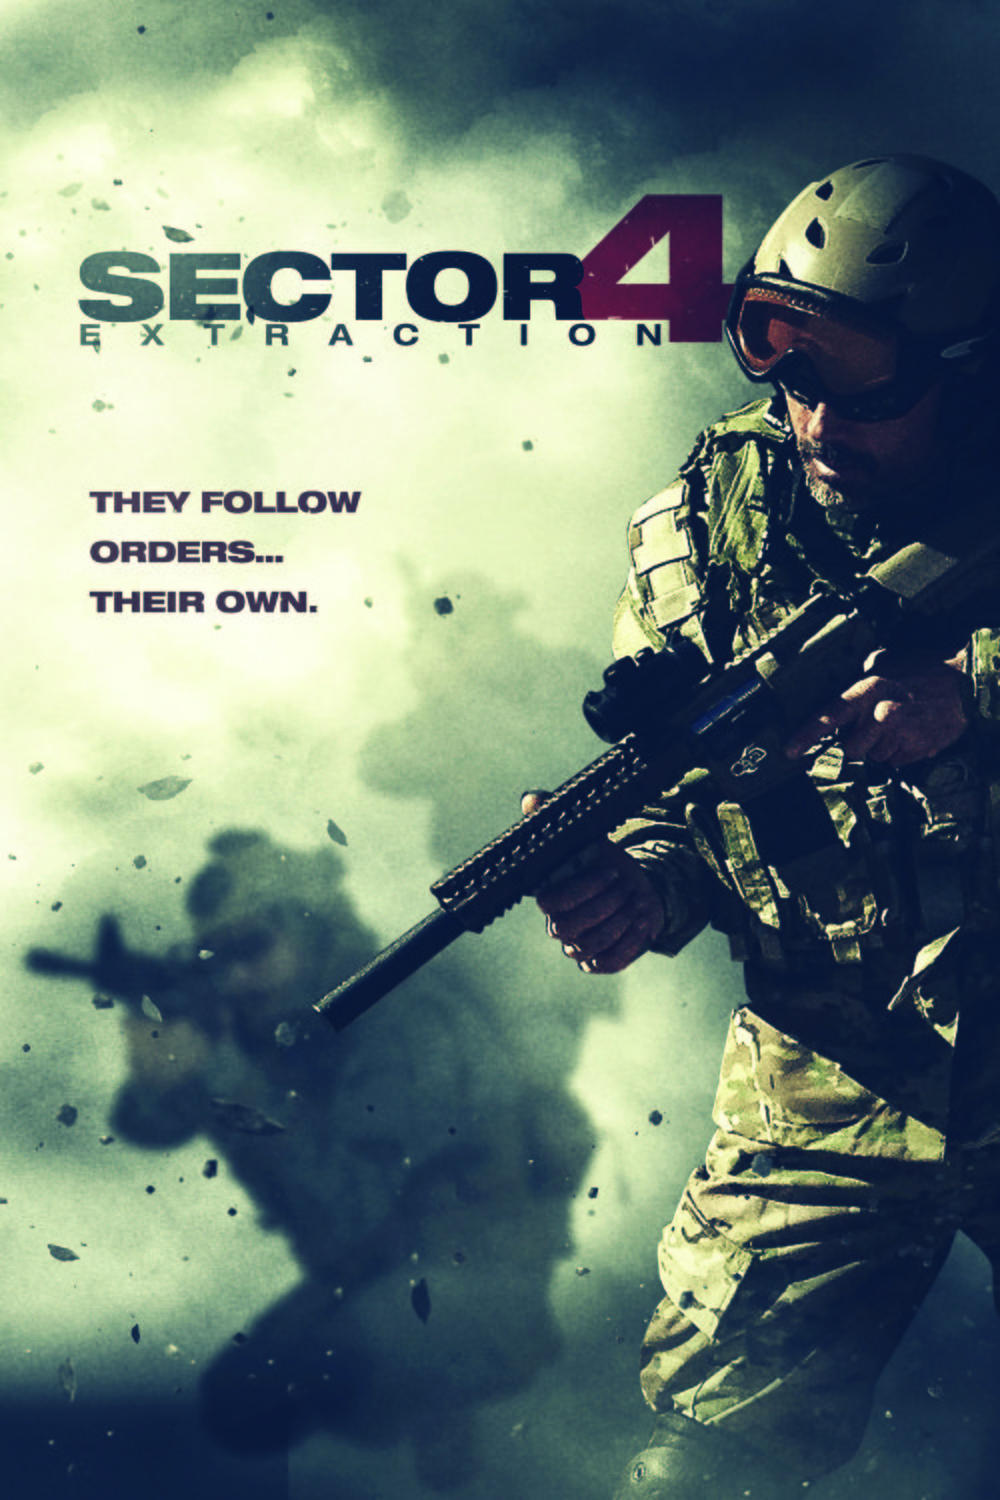 L'affiche du film Sector 4: Extraction